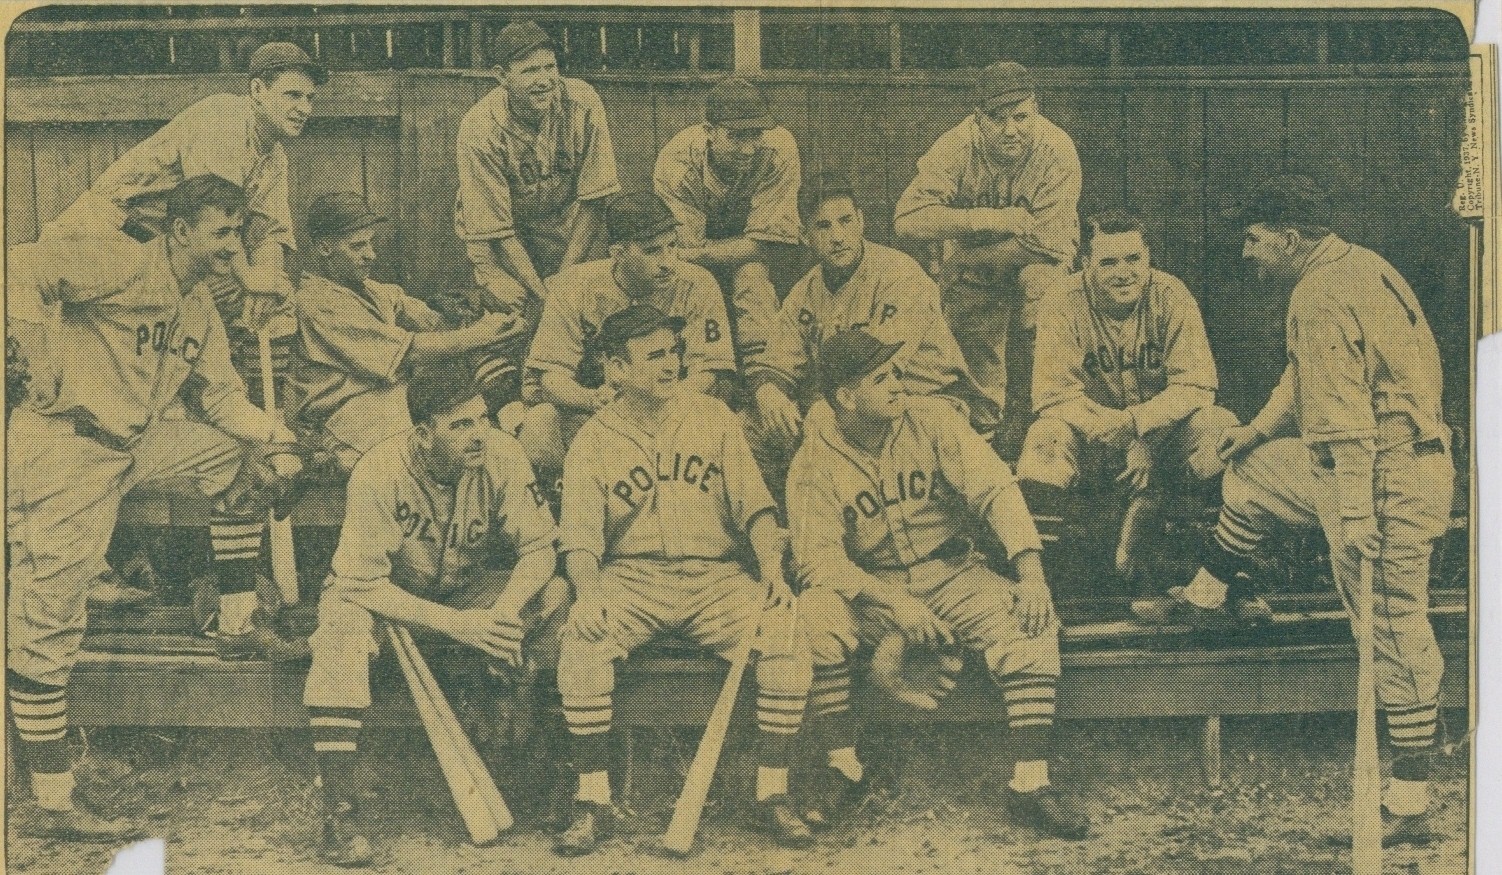 1937 G Baltimore Police Baseball team